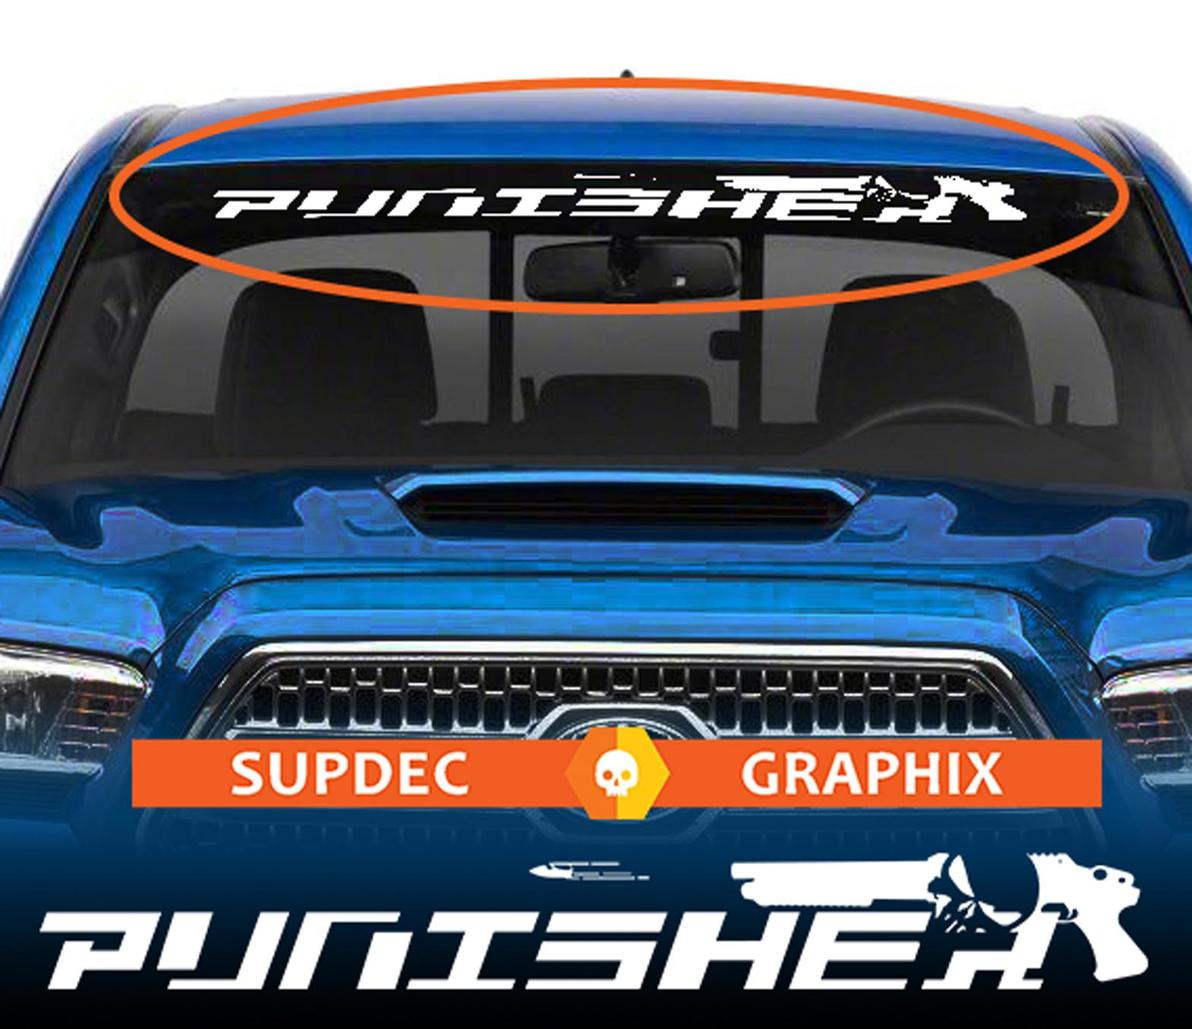 Punisher bullet Window Windshield Banner Decal Sticker from SupDec Graphix
